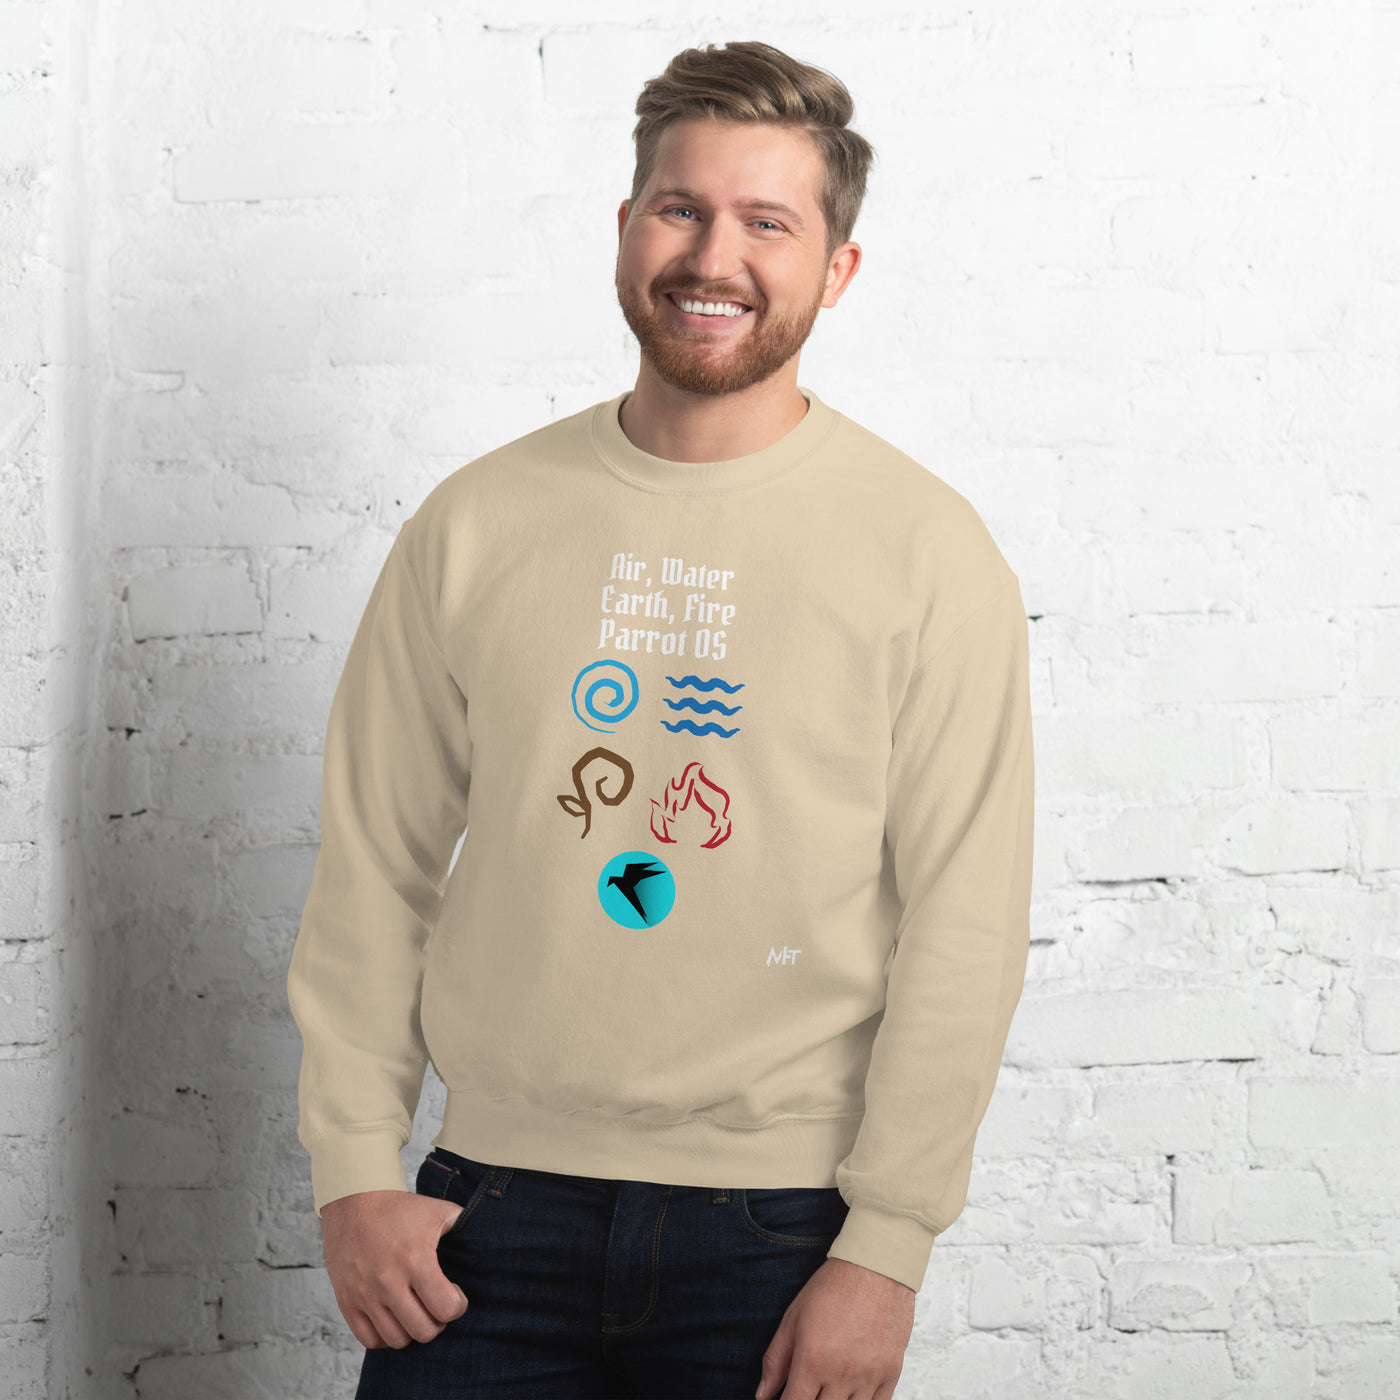 Air, Water, Earth, Fire, Parrot OS - Unisex Sweatshirt